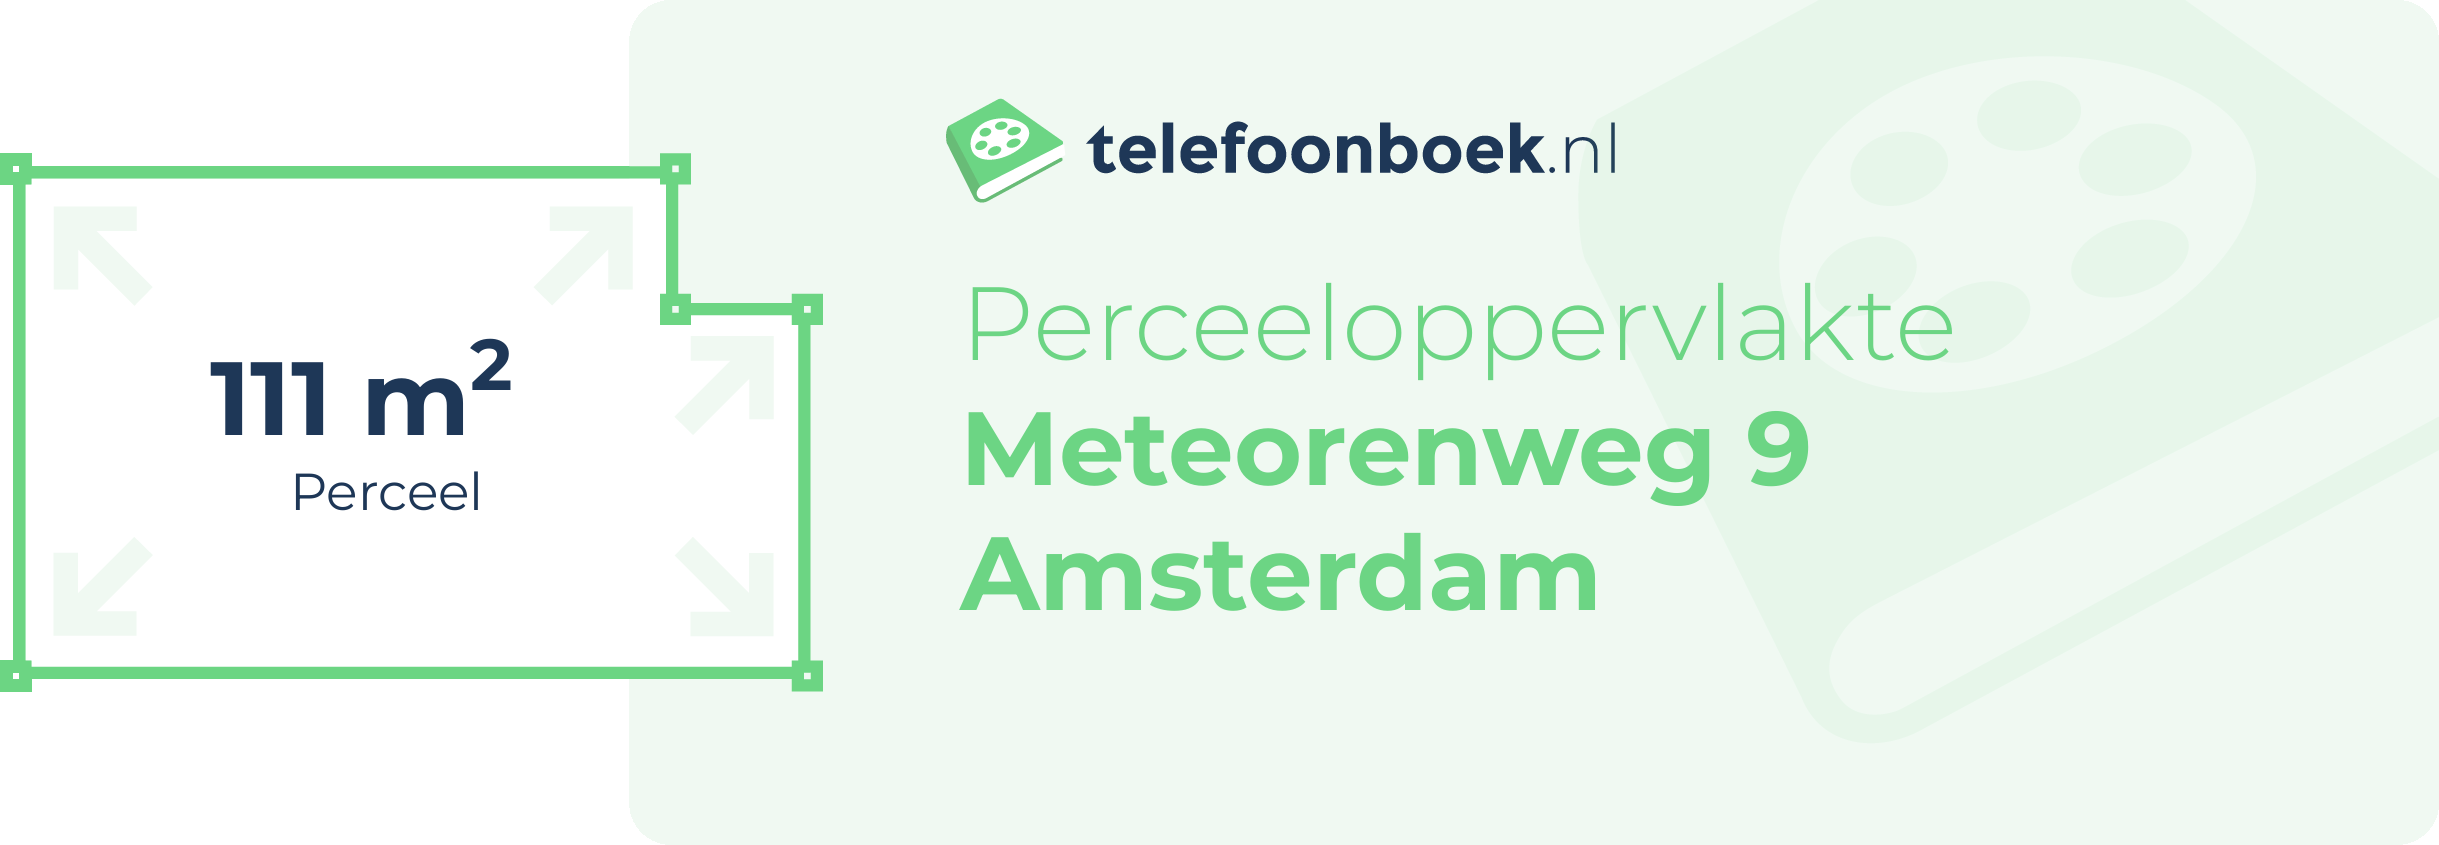 Perceeloppervlakte Meteorenweg 9 Amsterdam